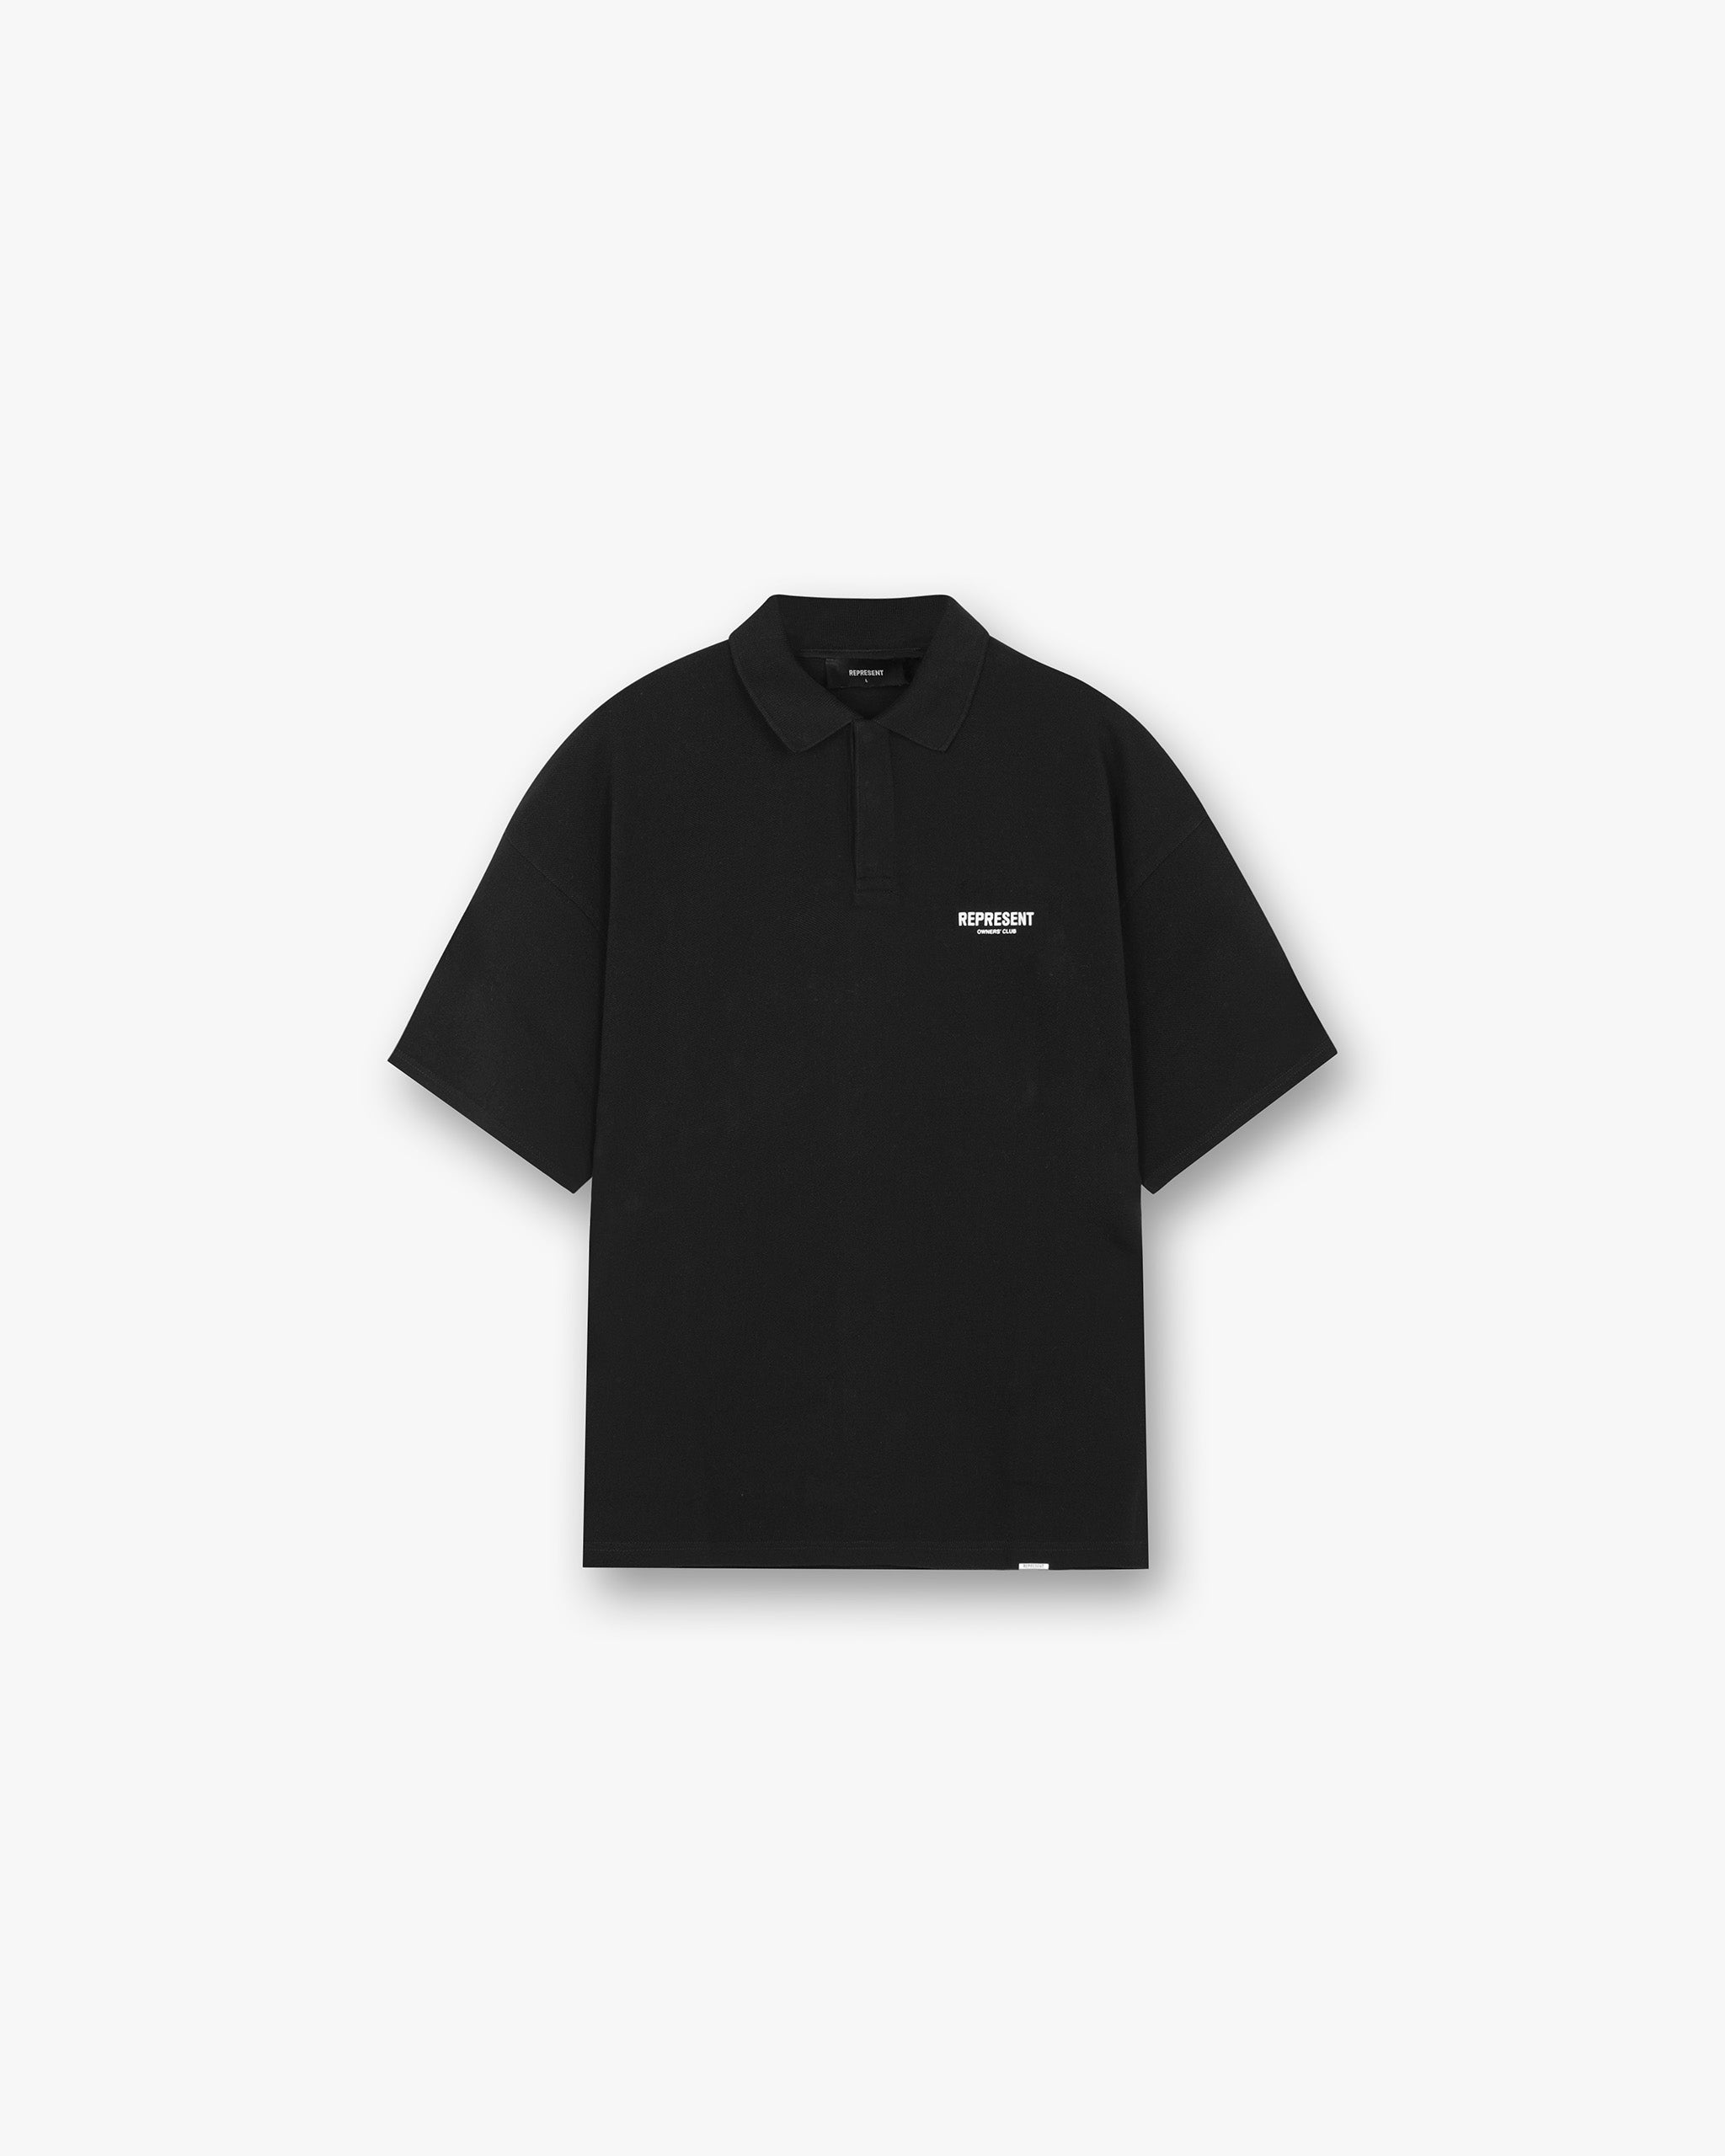 Represent Owners Club Polo Shirt - Black